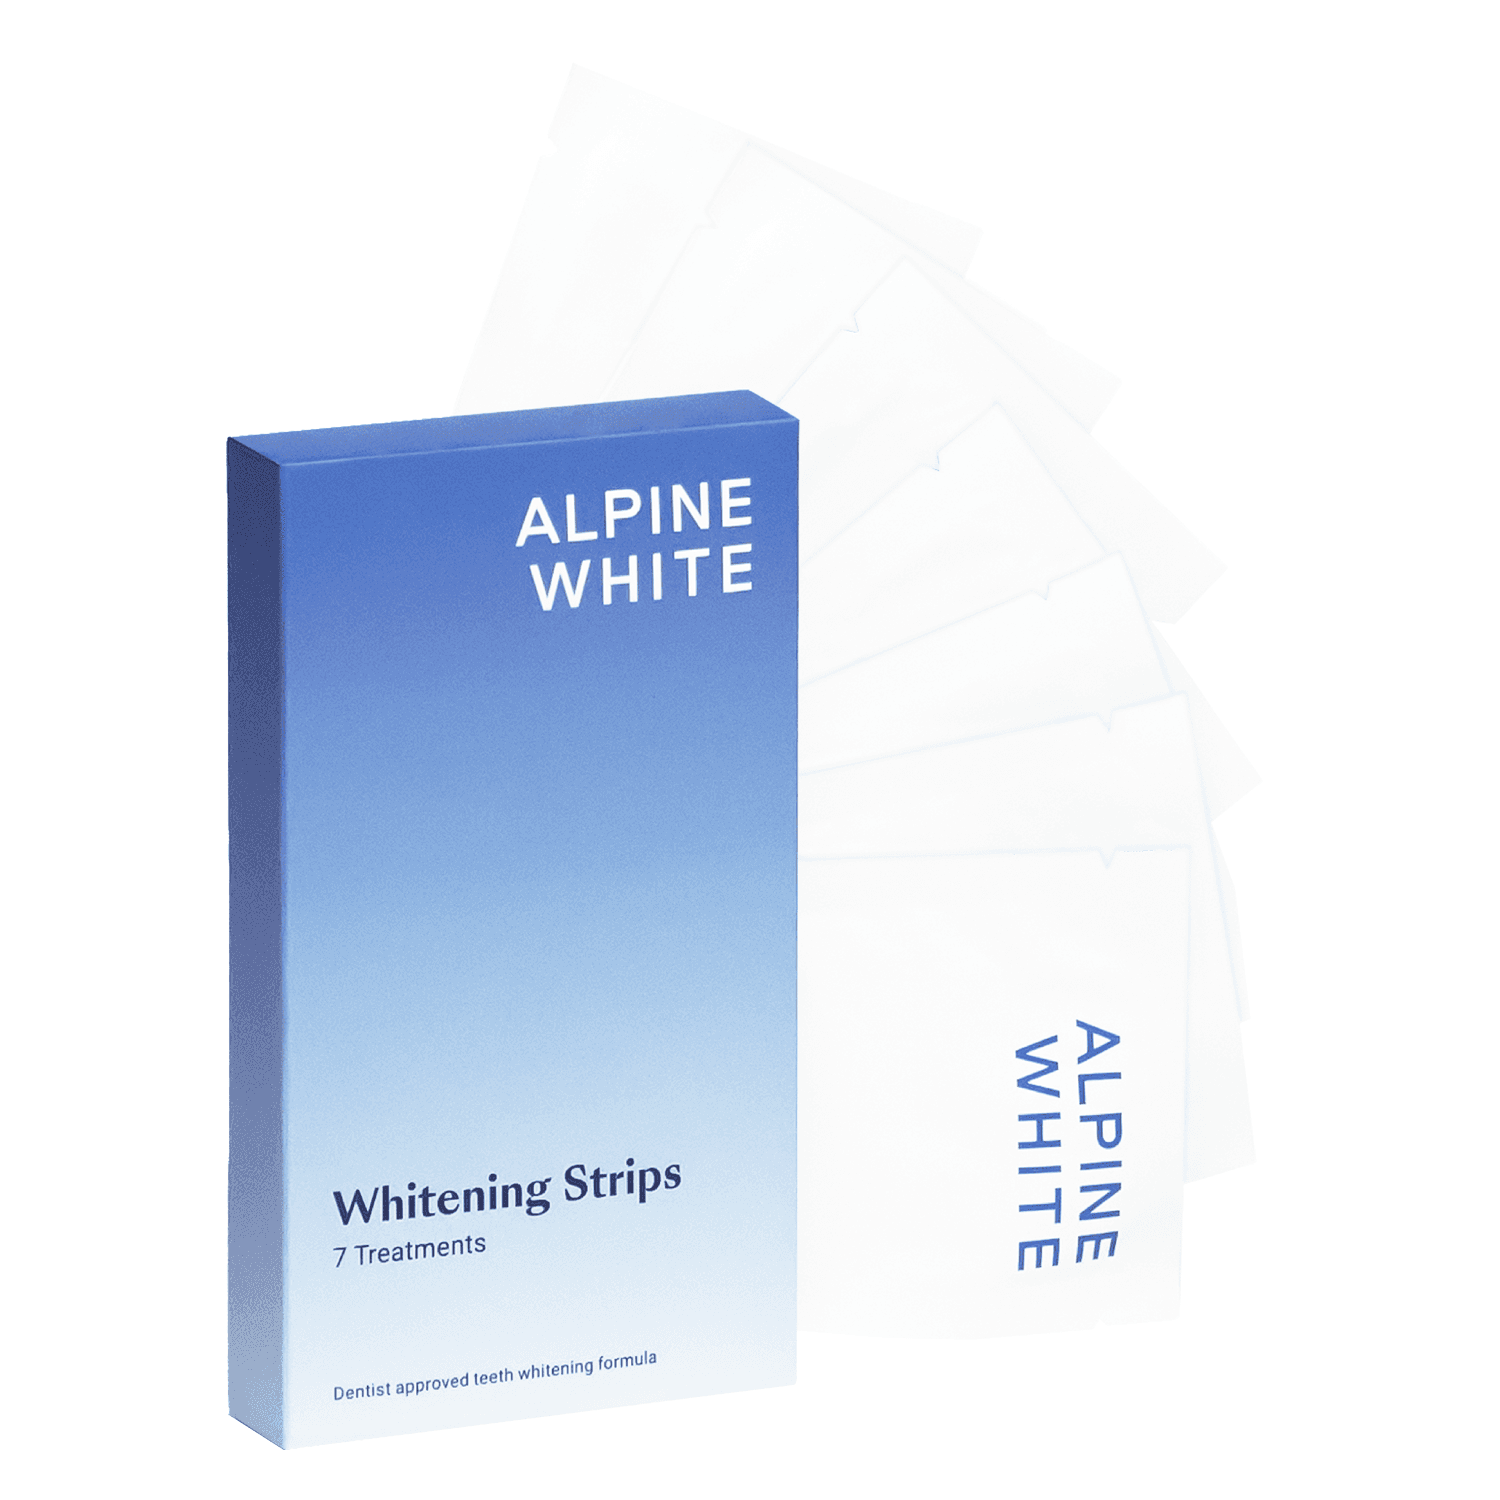 ALPINE WHITE - Whitening Strips